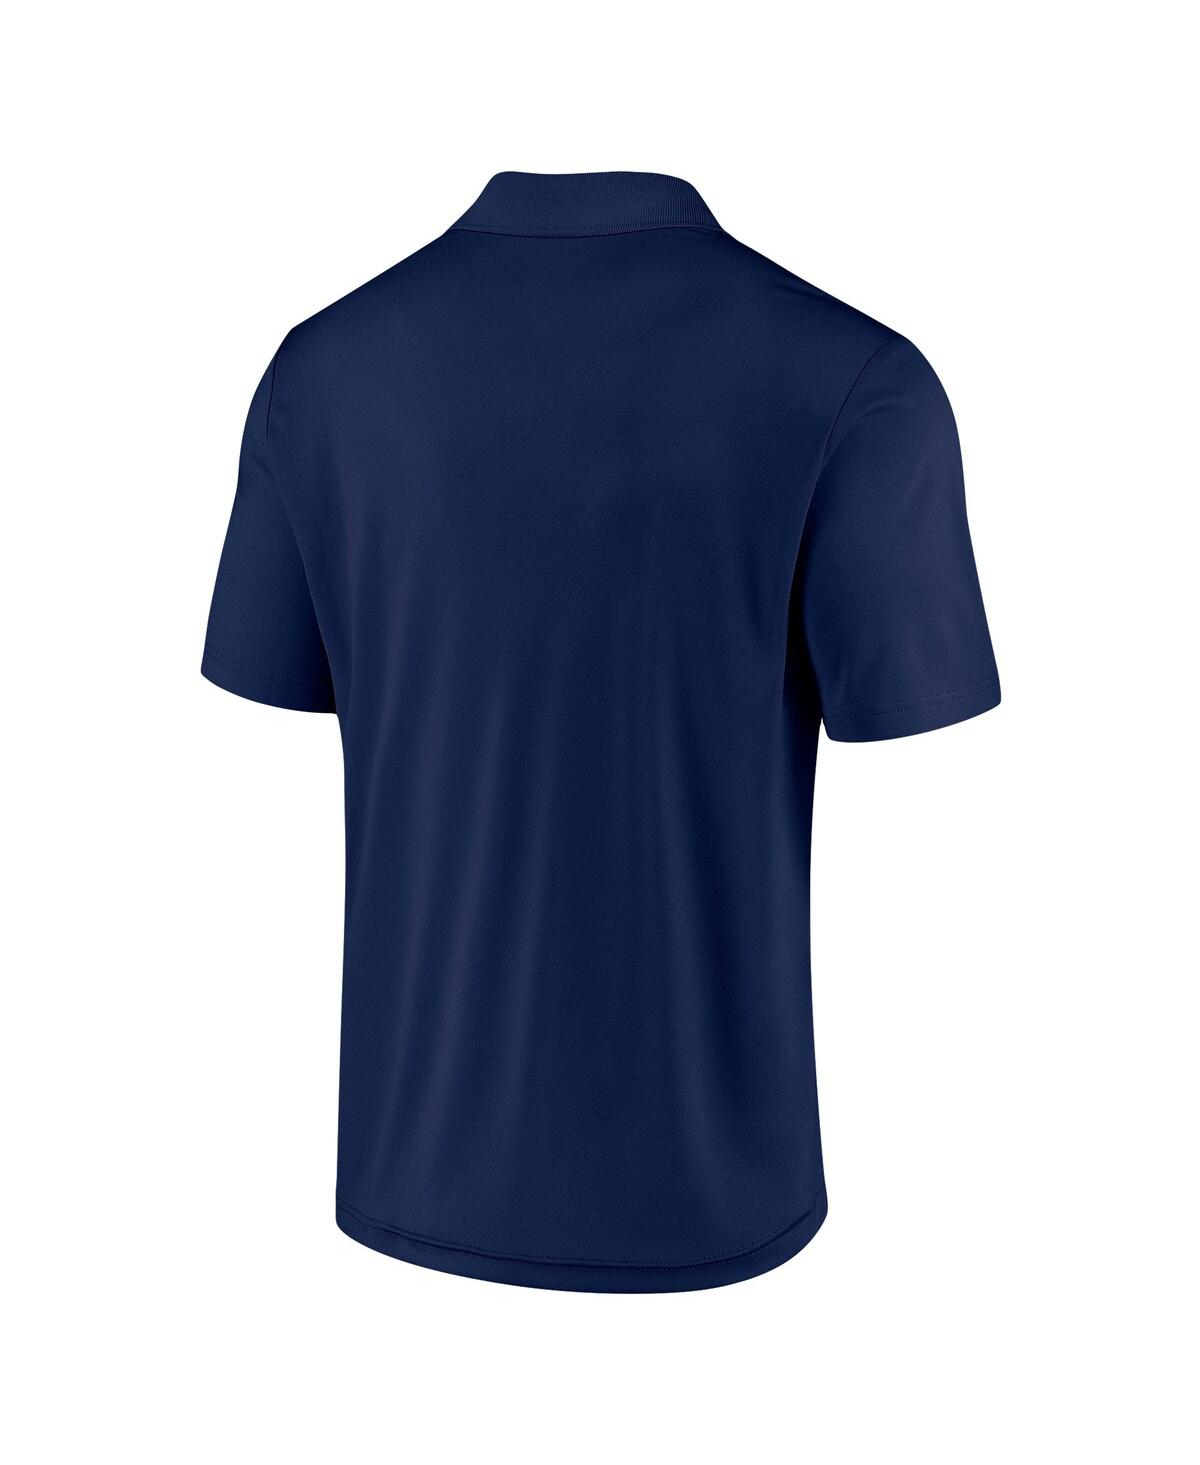 Shop Fanatics Men's  Navy Tennessee Titans Component Polo Shirt